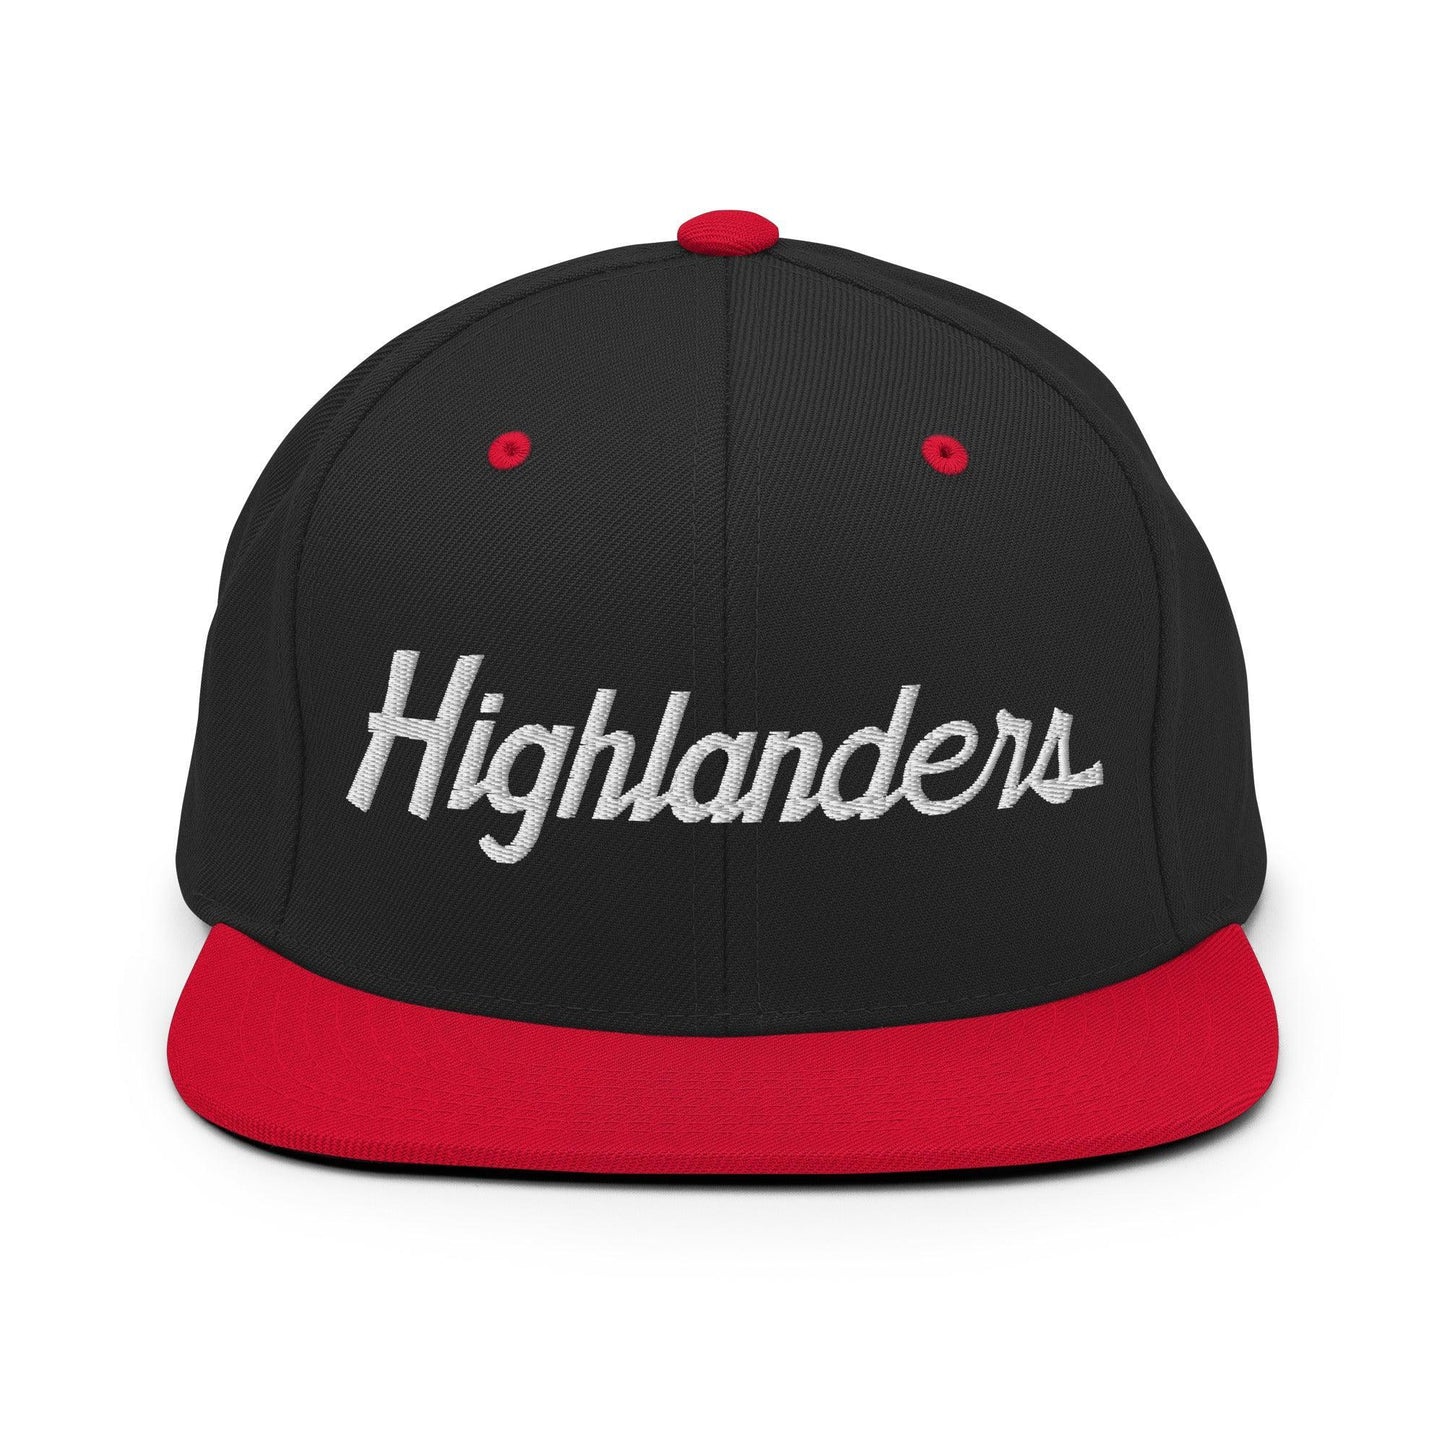 Highlanders School Mascot Script Snapback Hat Black Red